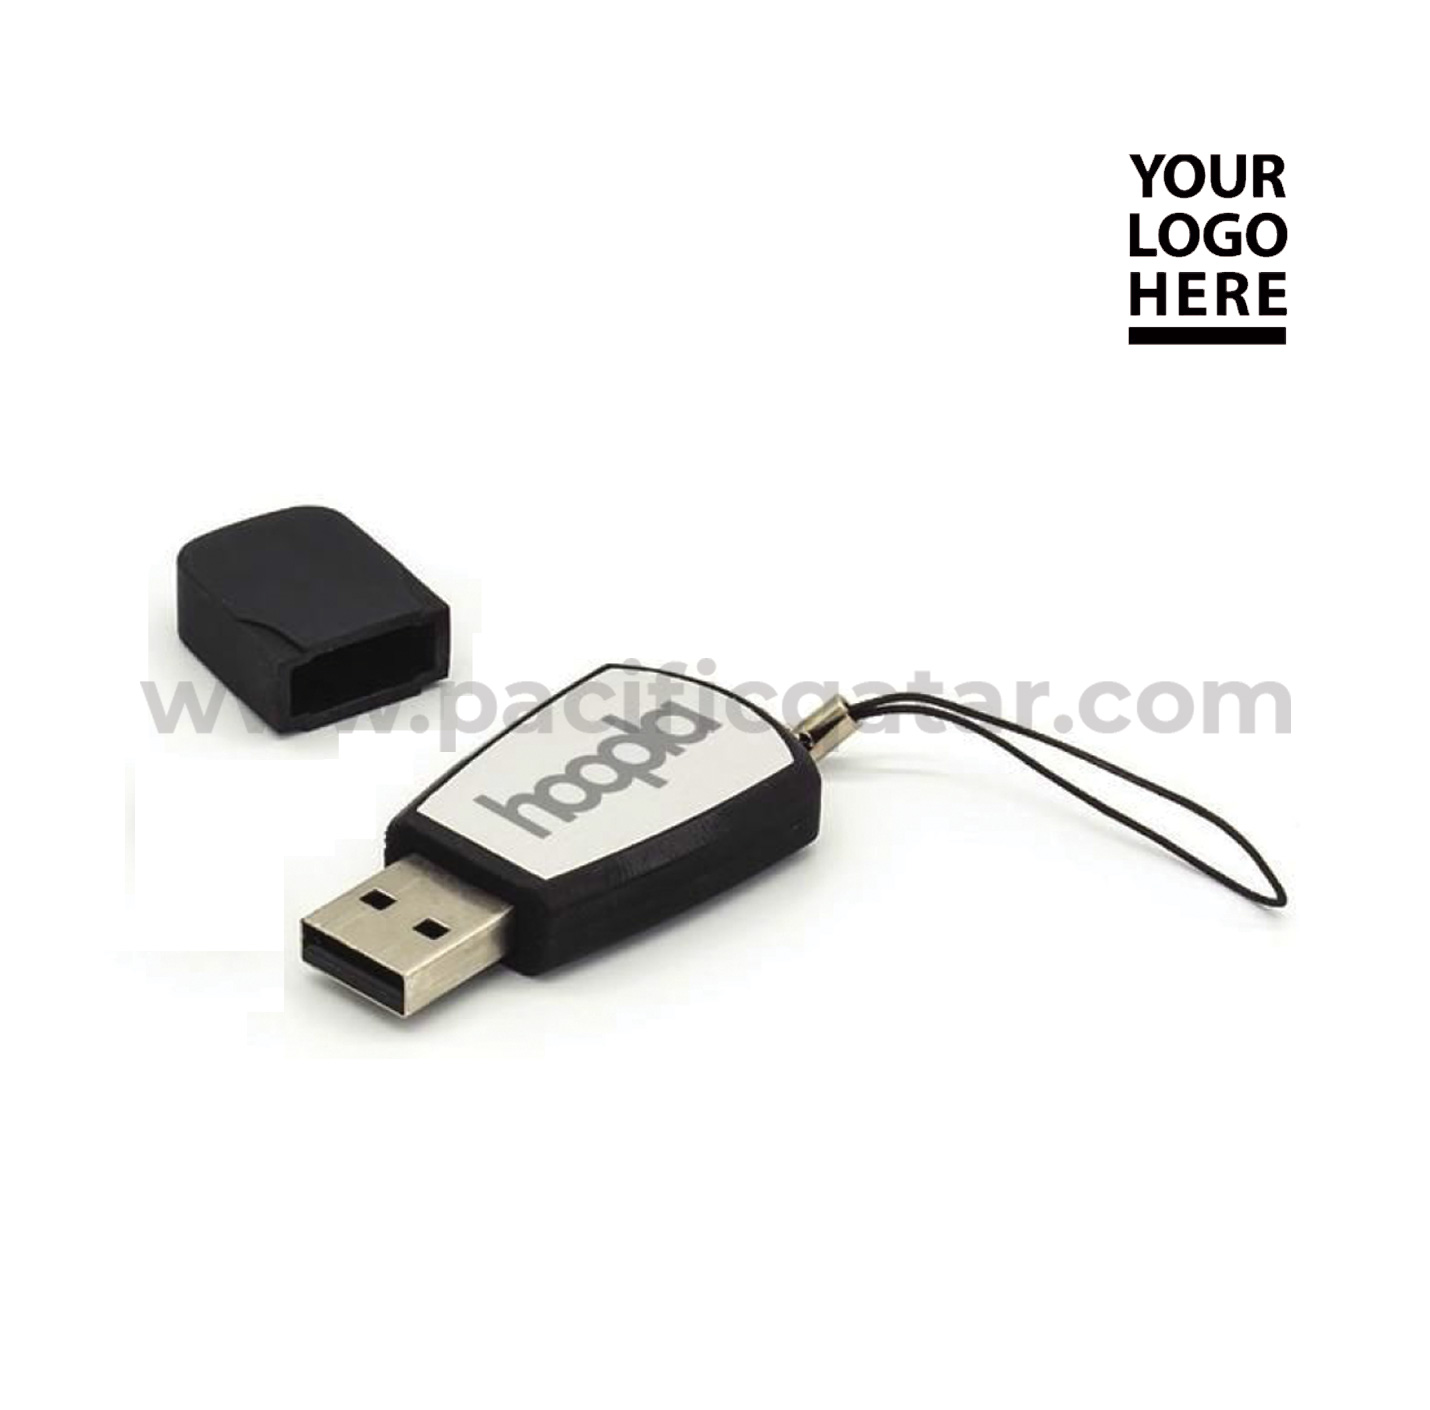 Black Rubberized USB Flash Drive